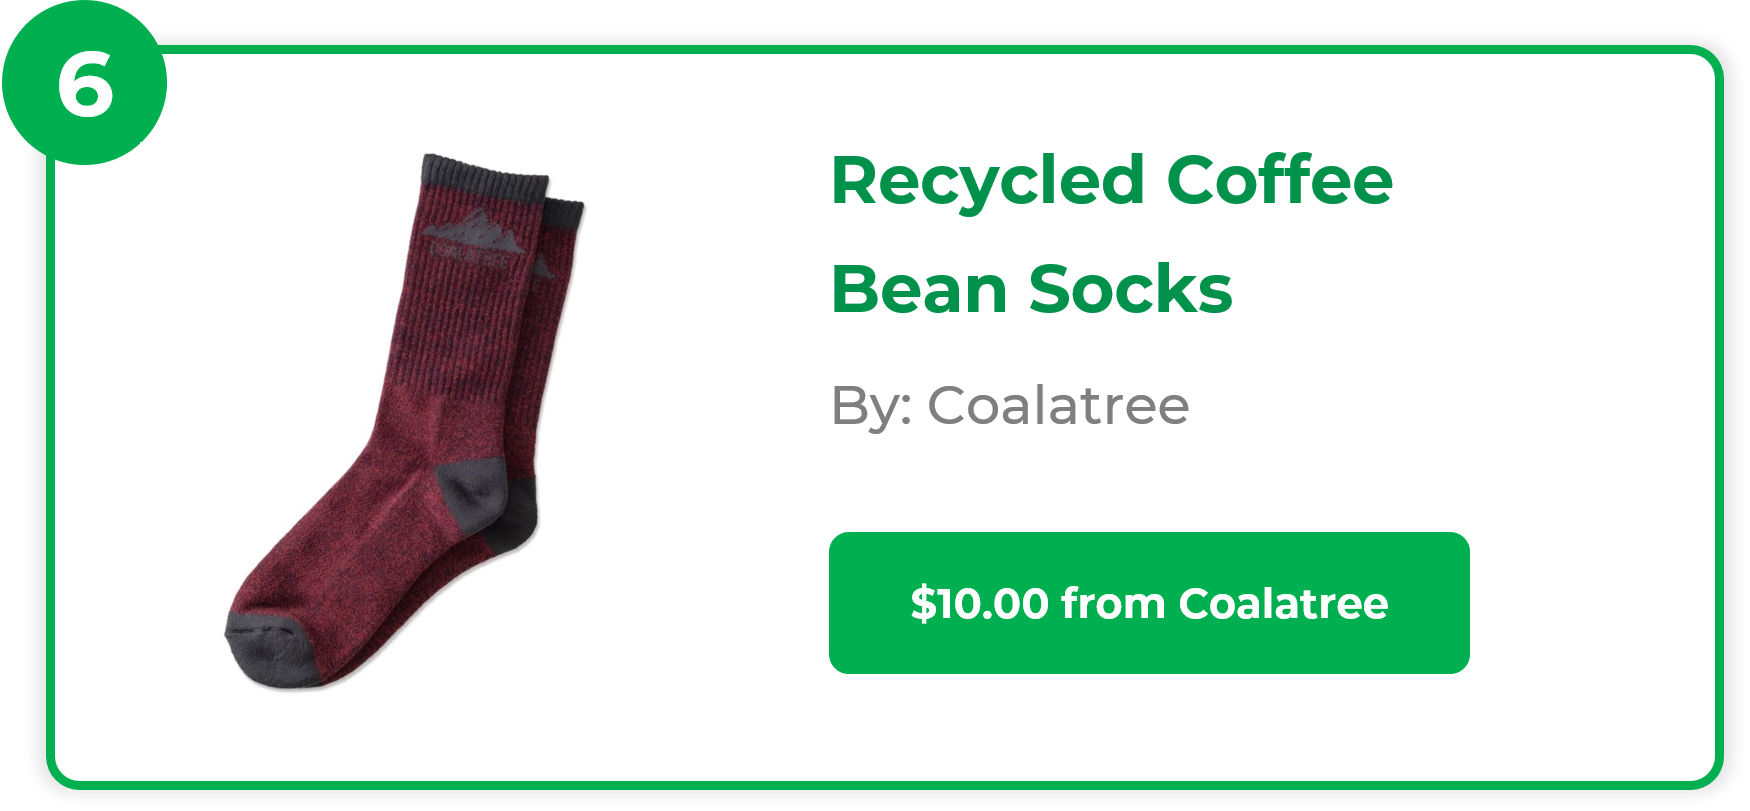 Recycled Coffee Bean Socks - Coalatree